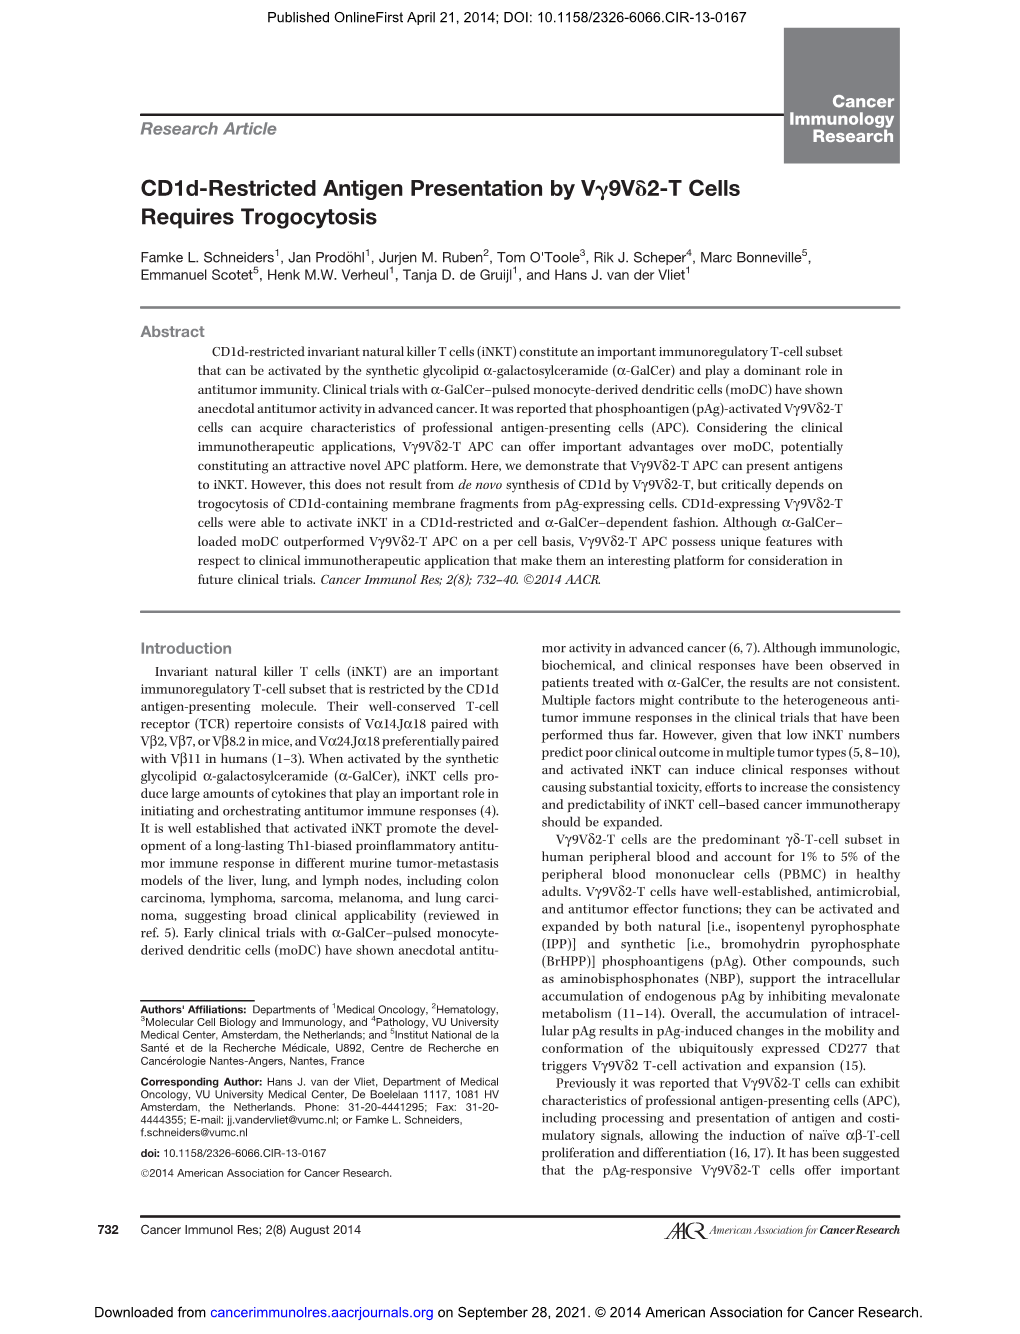 Cd1d-Restricted Antigen Presentation by Vg9vd2-T Cells Requires Trogocytosis